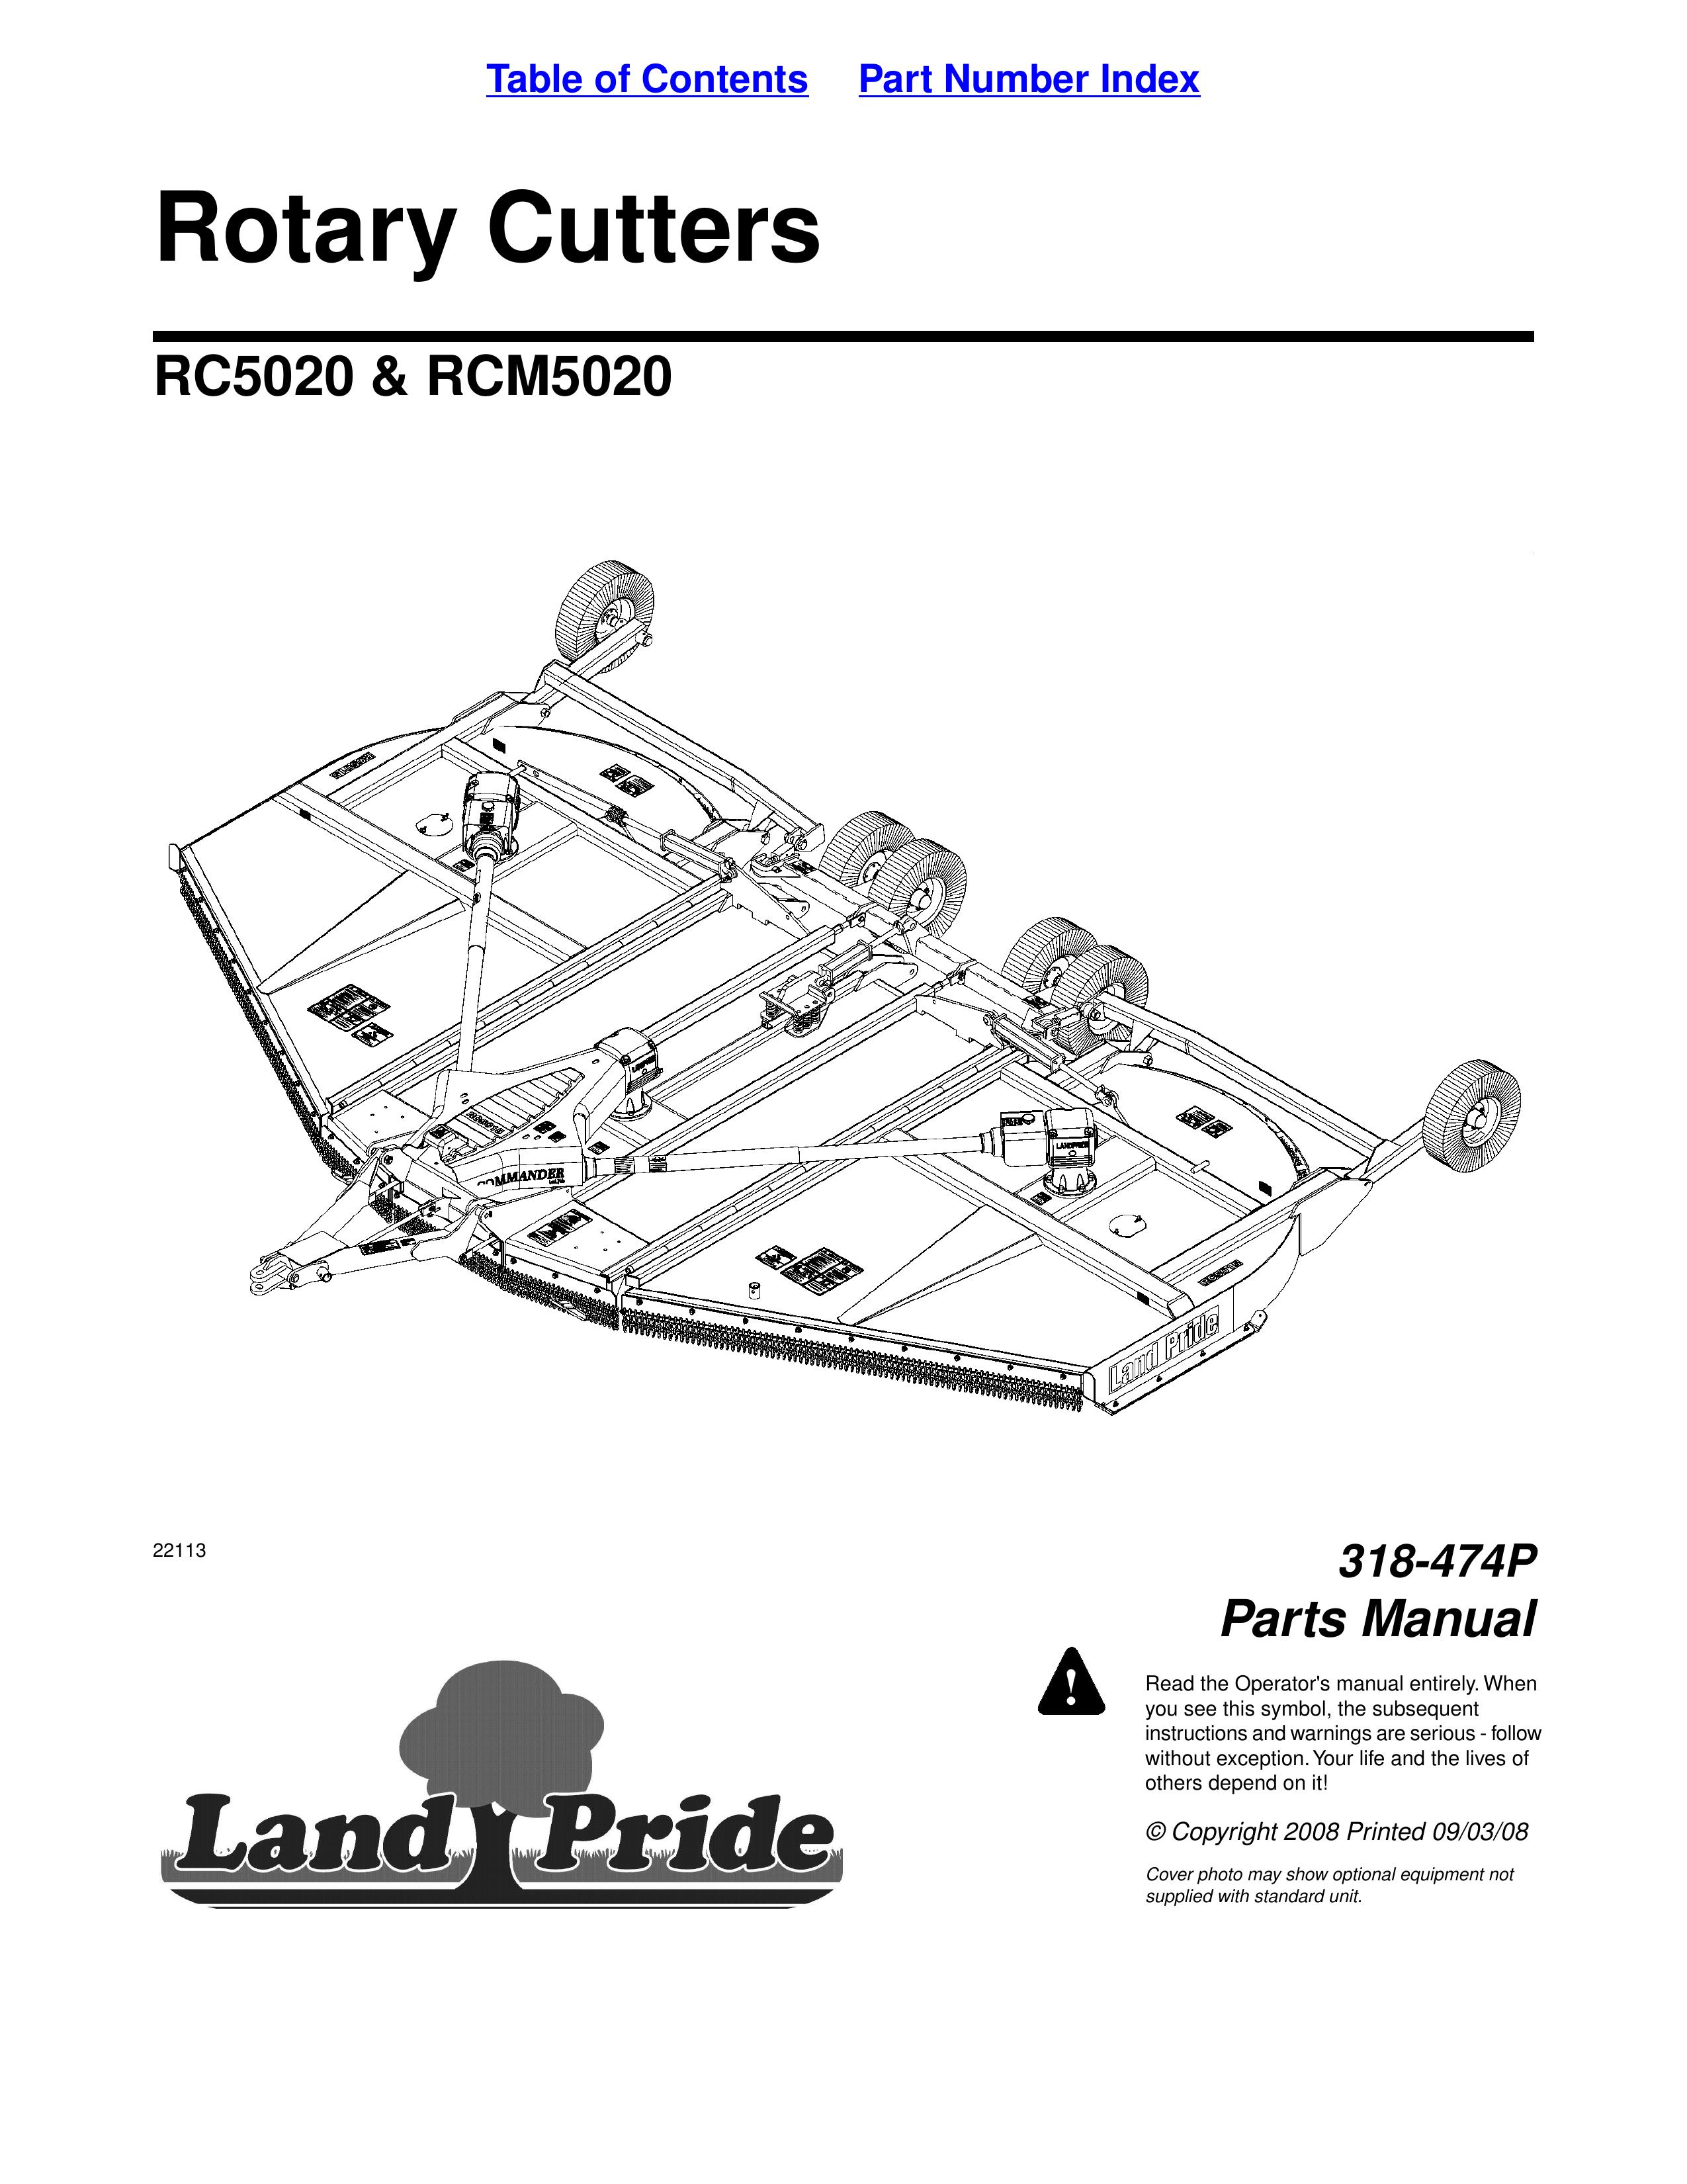 Land Pride RC5020 Brush Cutter User Manual